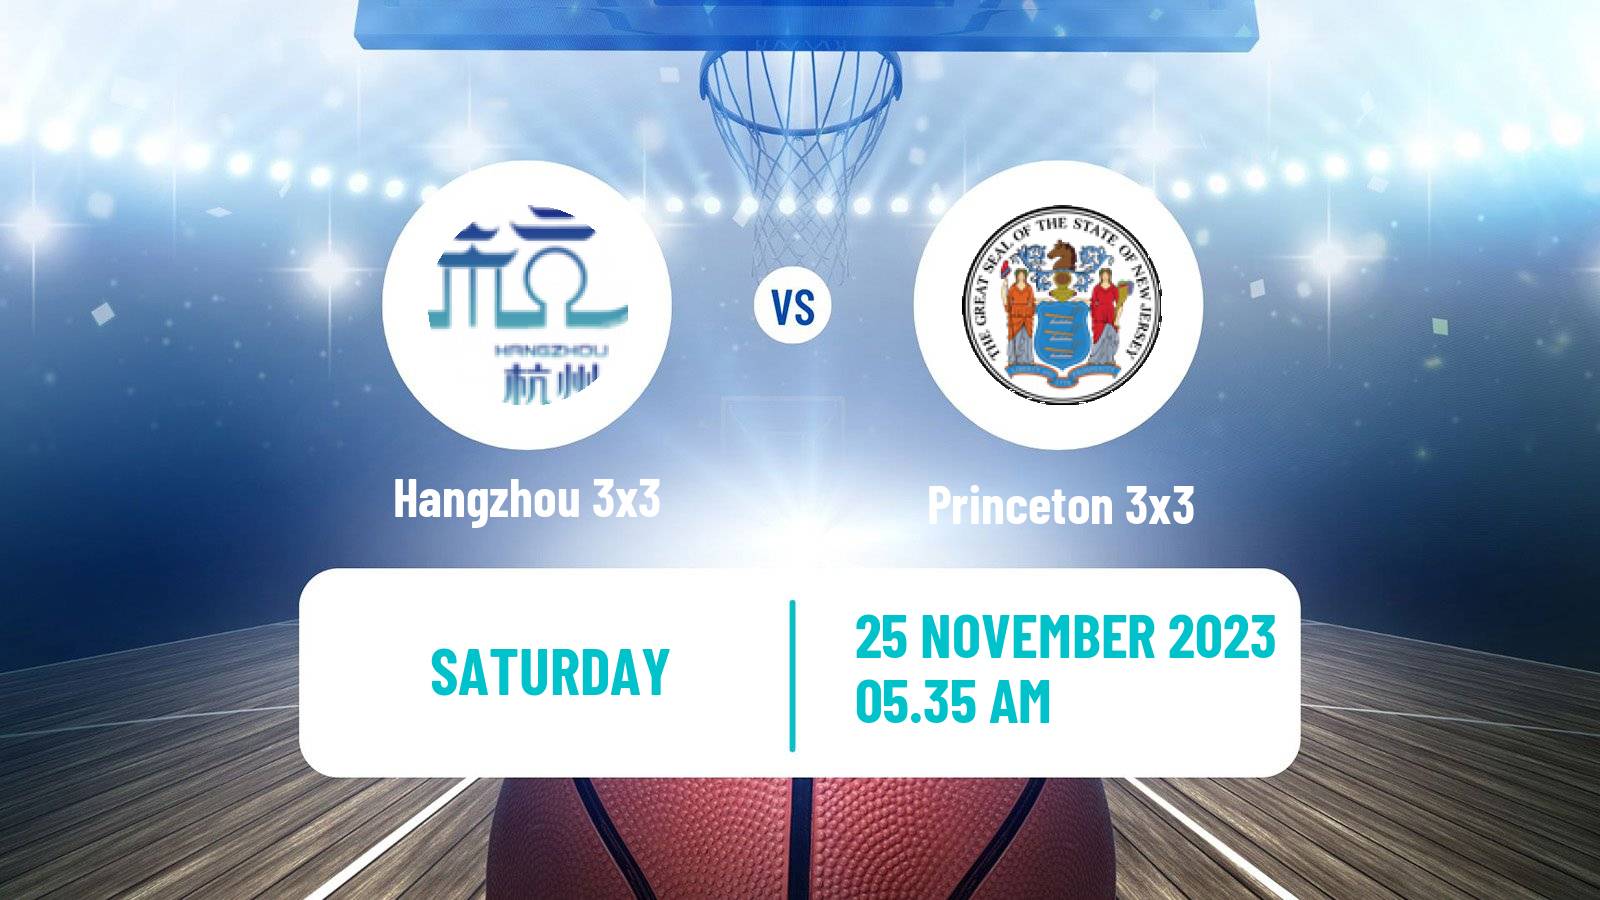 Basketball World Tour Hong Kong 3x3 Hangzhou 3x3 - Princeton 3x3